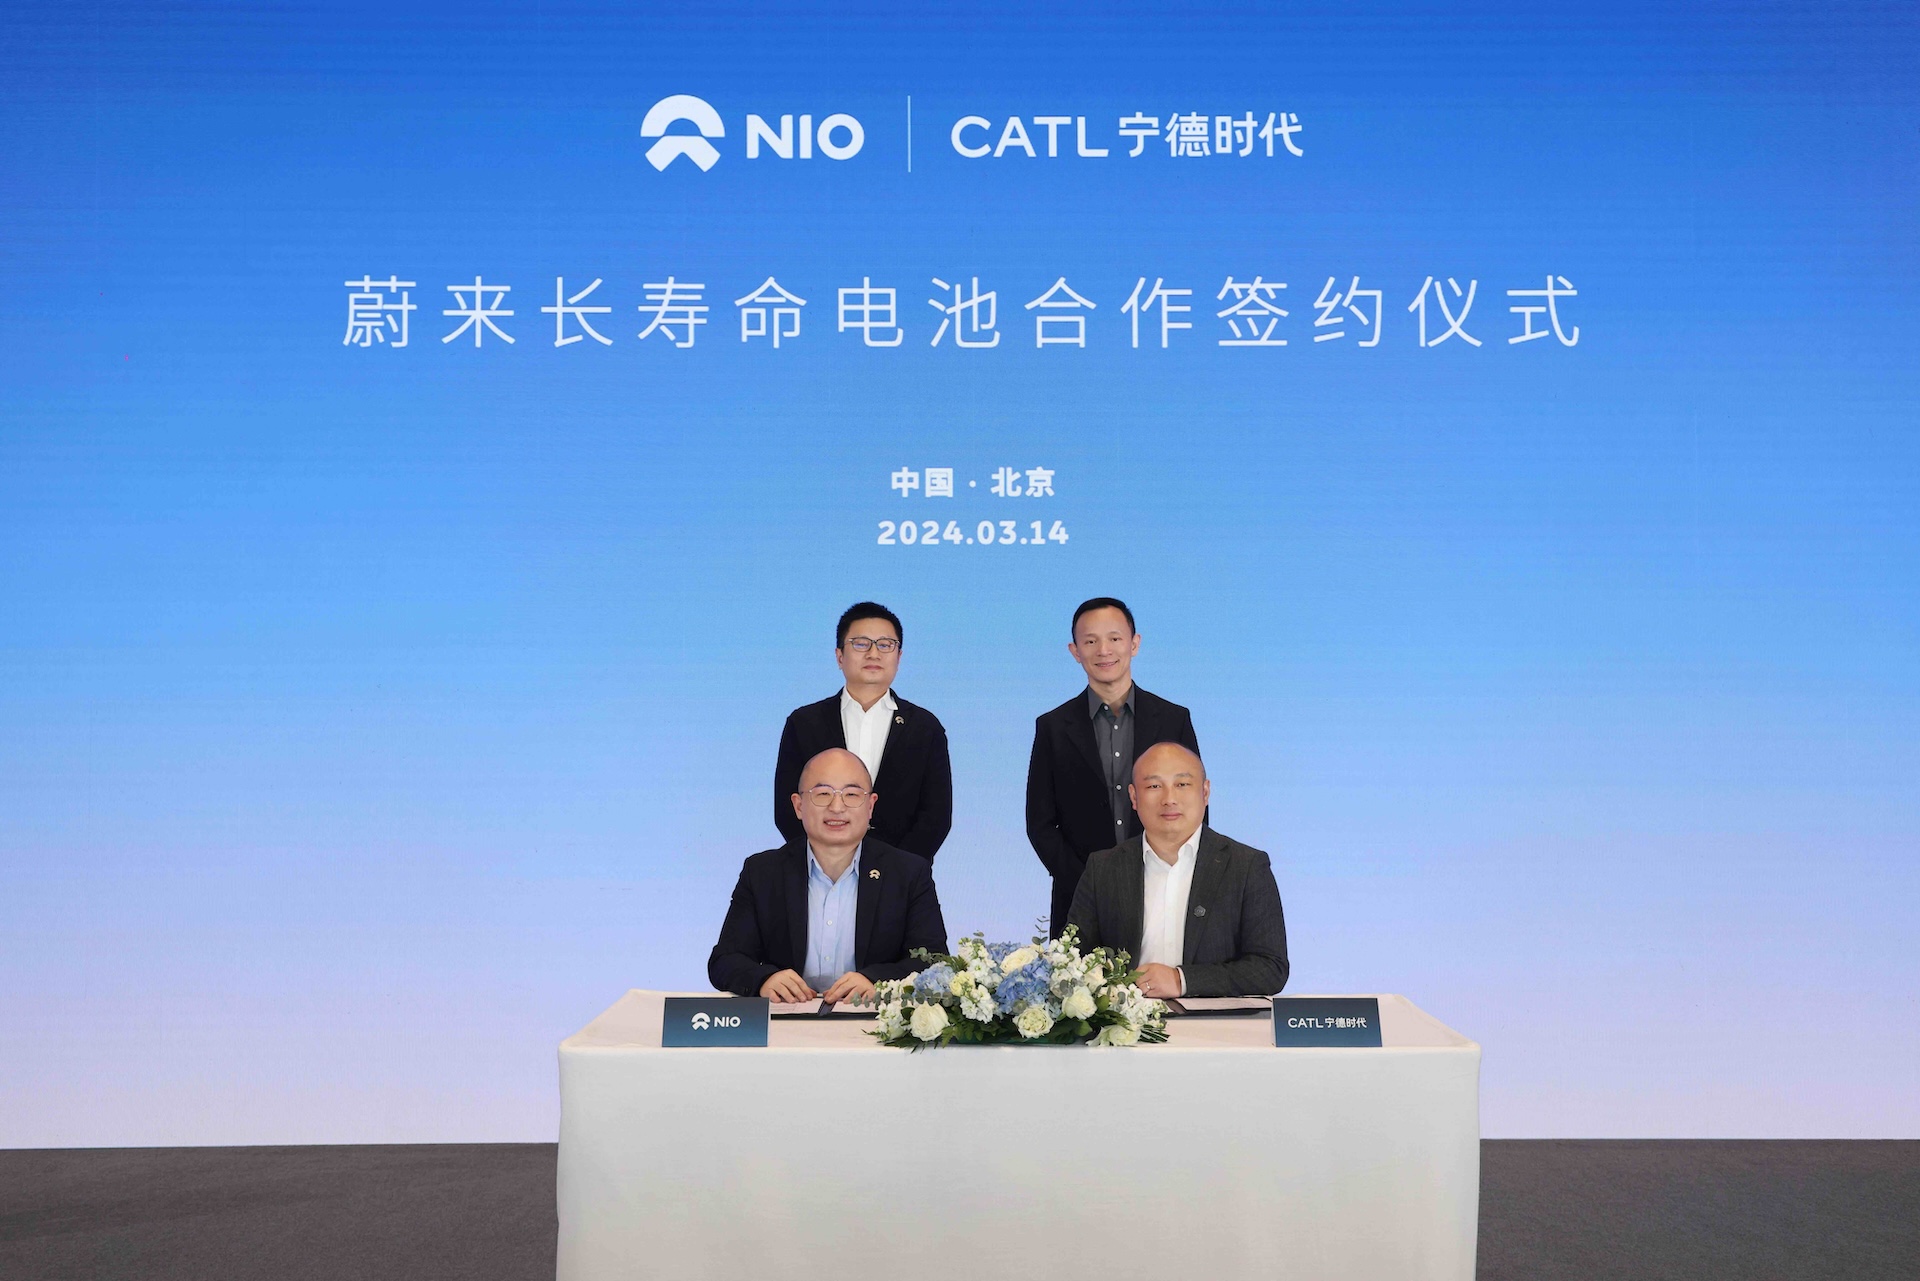 NIO-CATL Battery Innovation Partnership